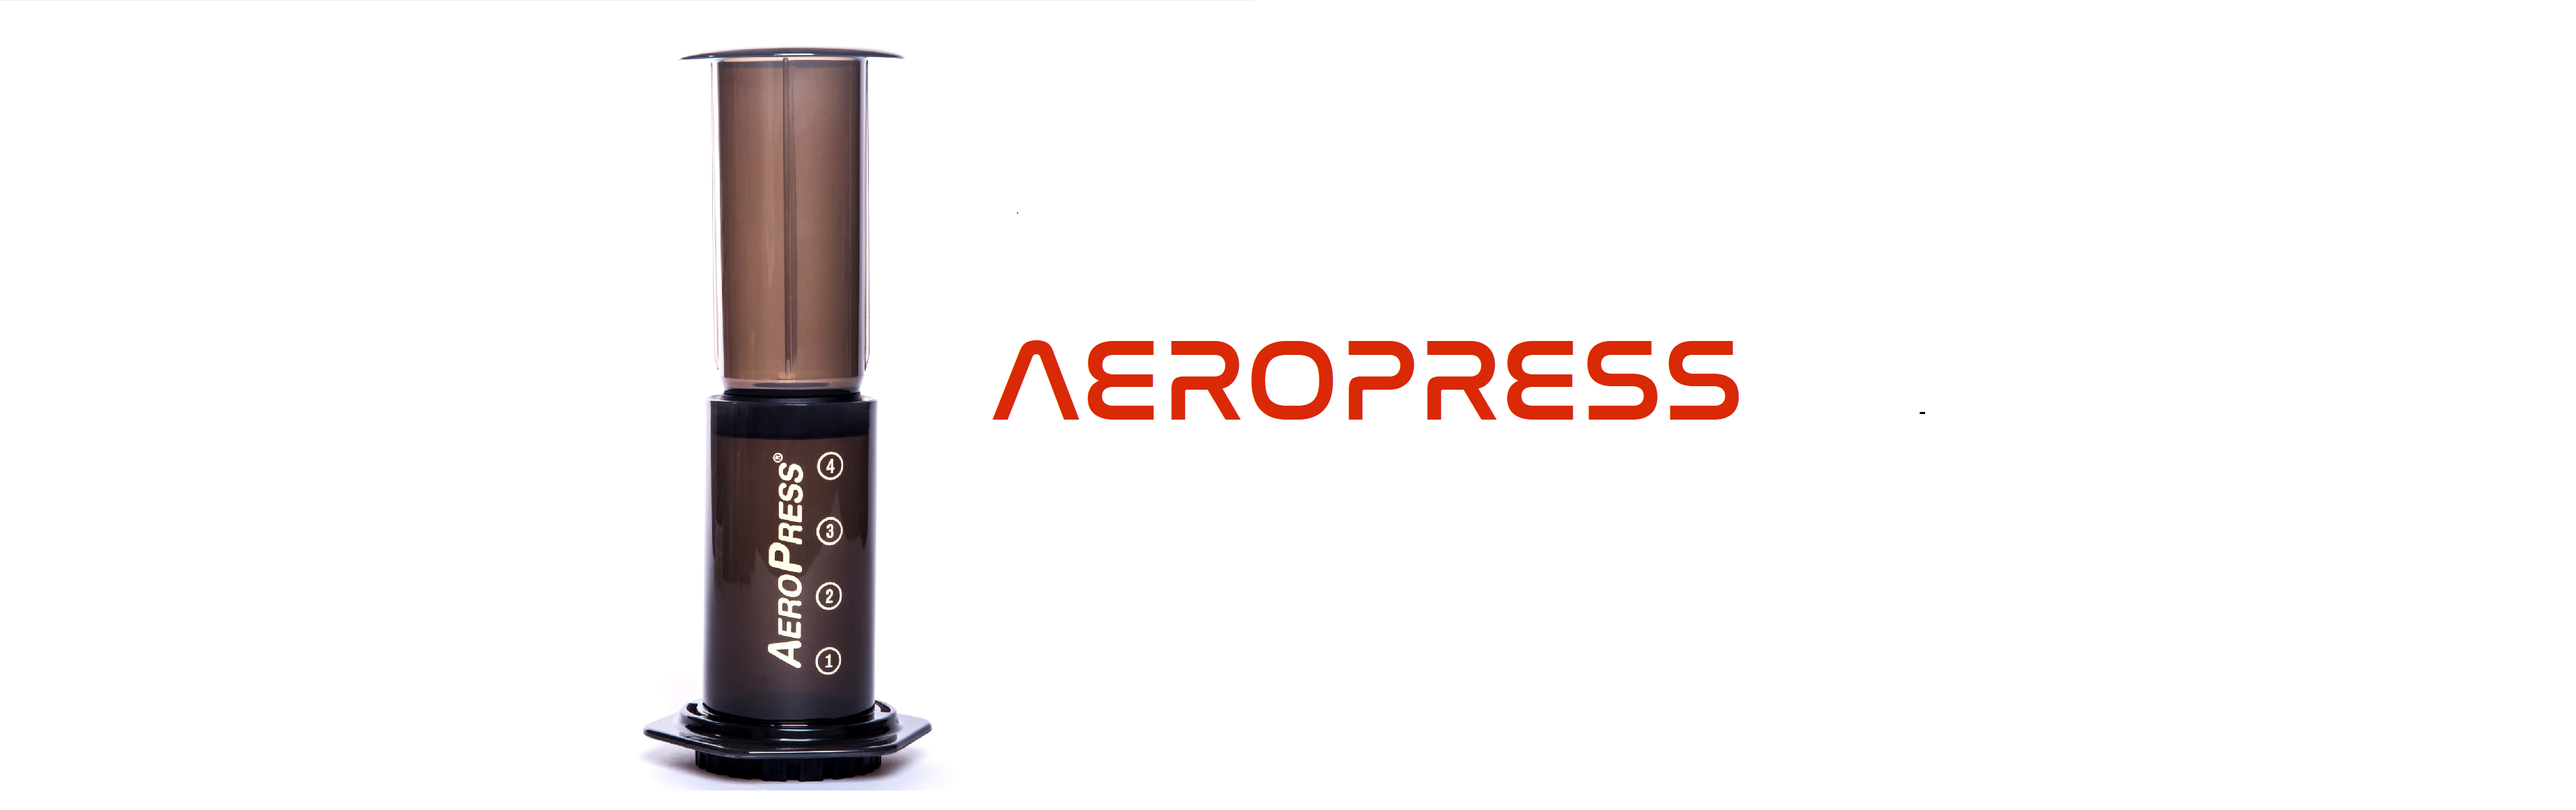 Aeropress – J Gursey Coffee Roasters